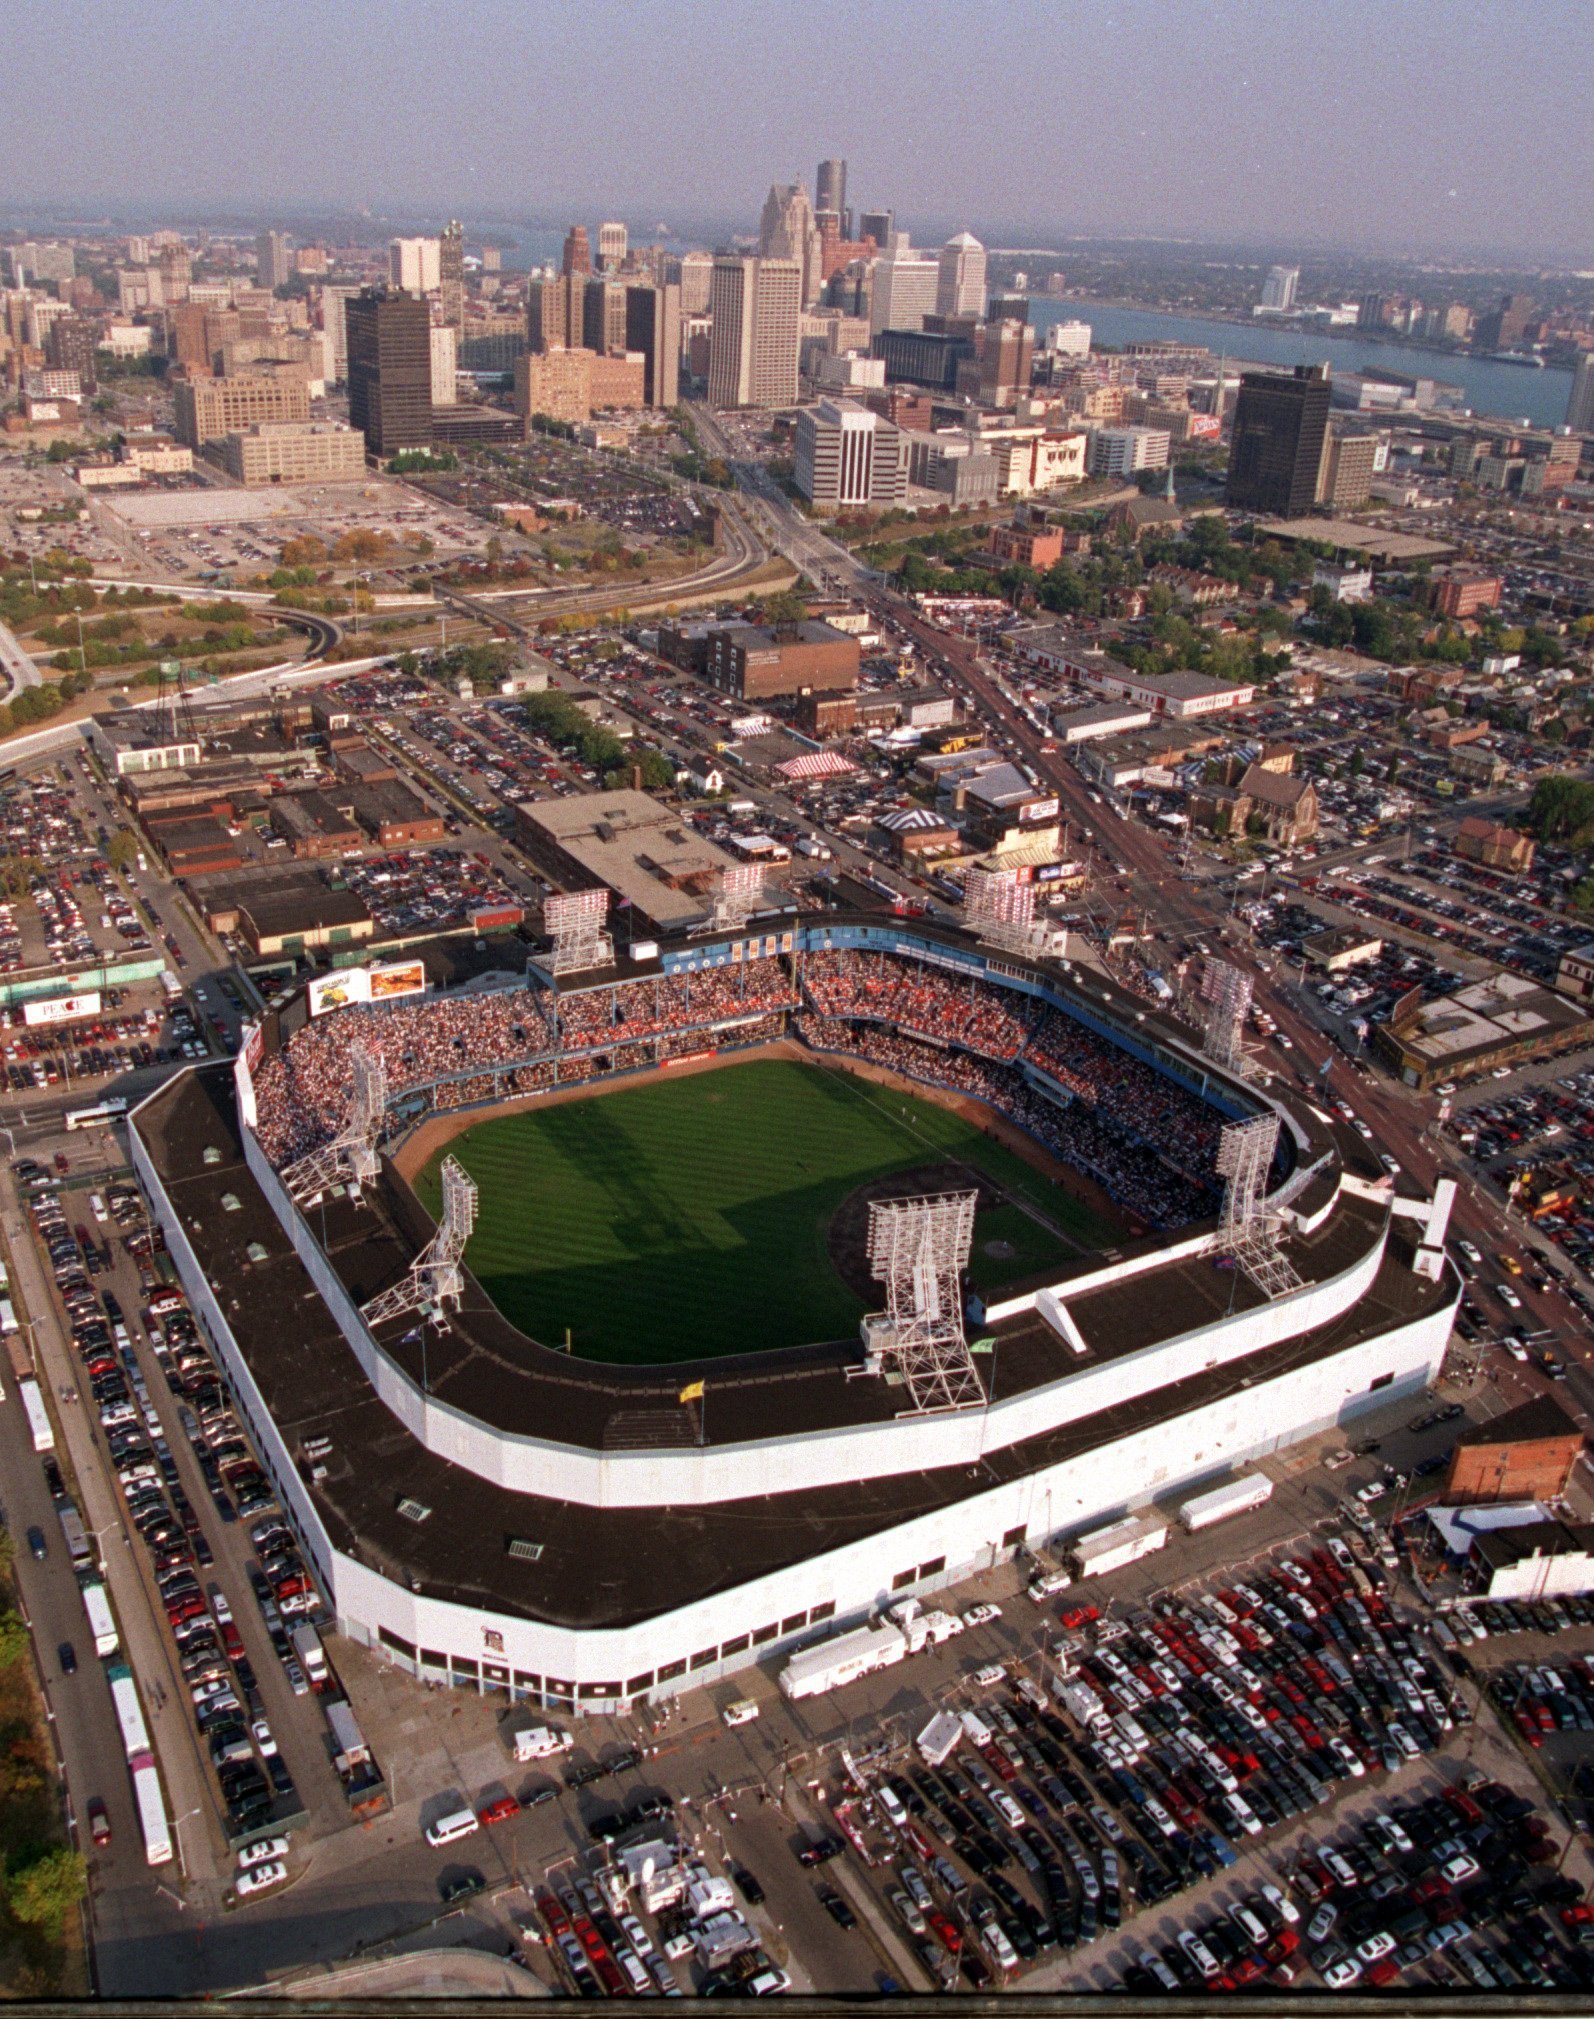 File:Tiger Stadium, Detroit.jpg - Wikipedia